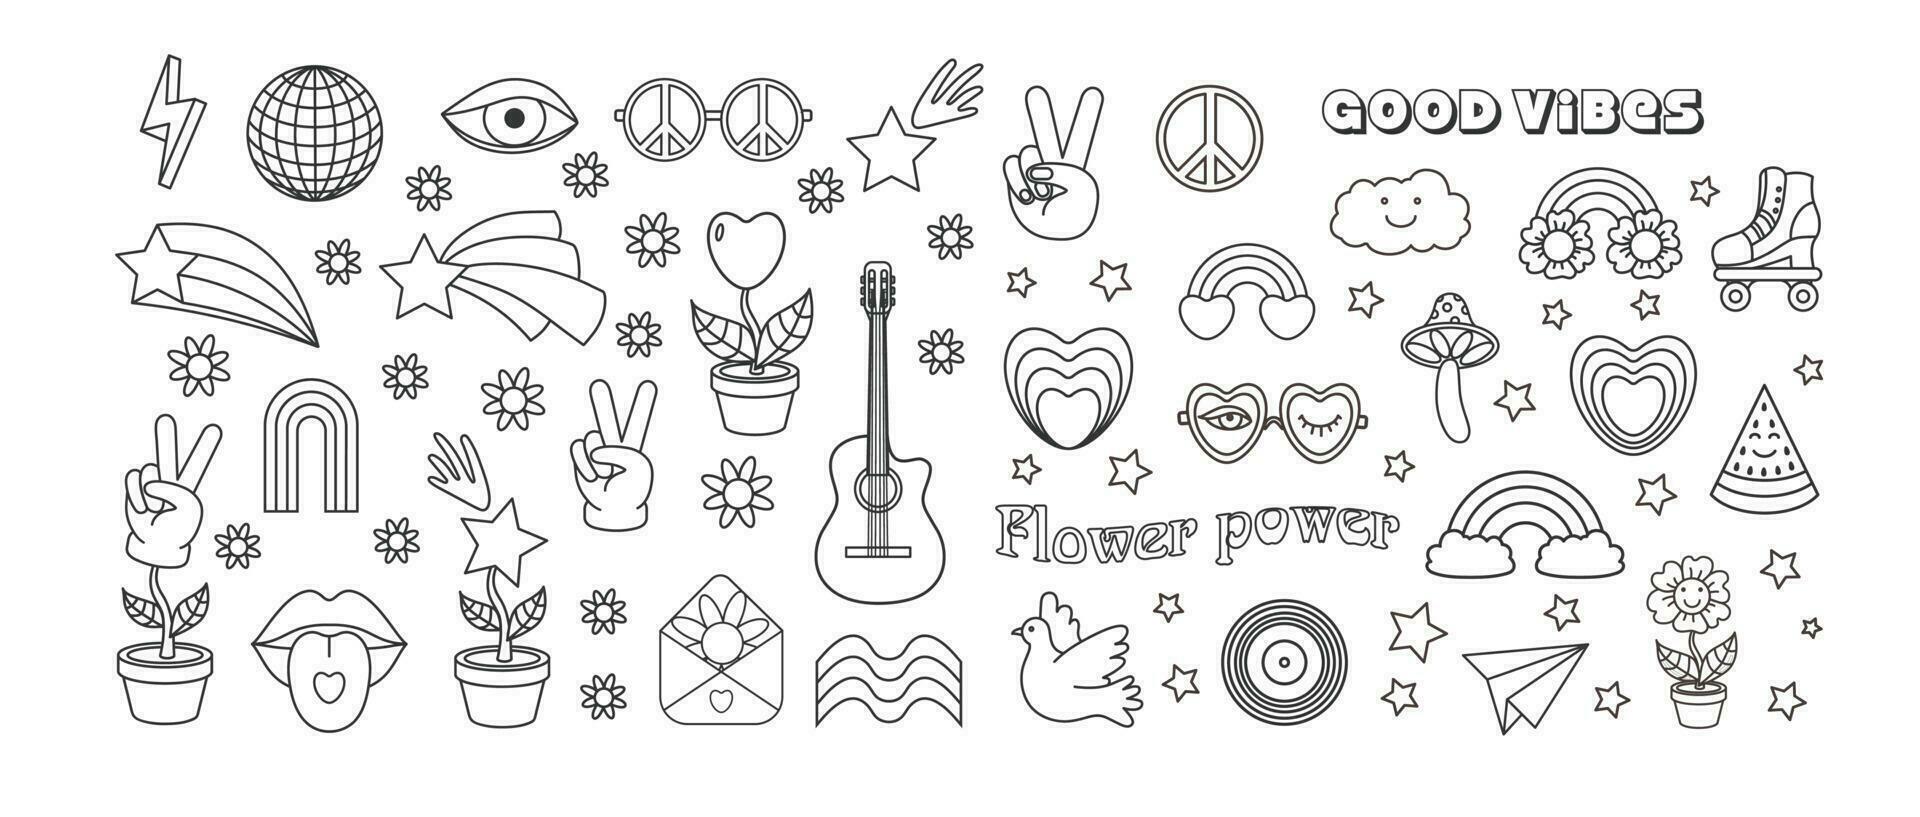 Outline peace, Love,  rainbow, disco ball, sunglasses, mouth, guitar icon  etc. Isolated vector illustration.  Groovy hippie 70s set.